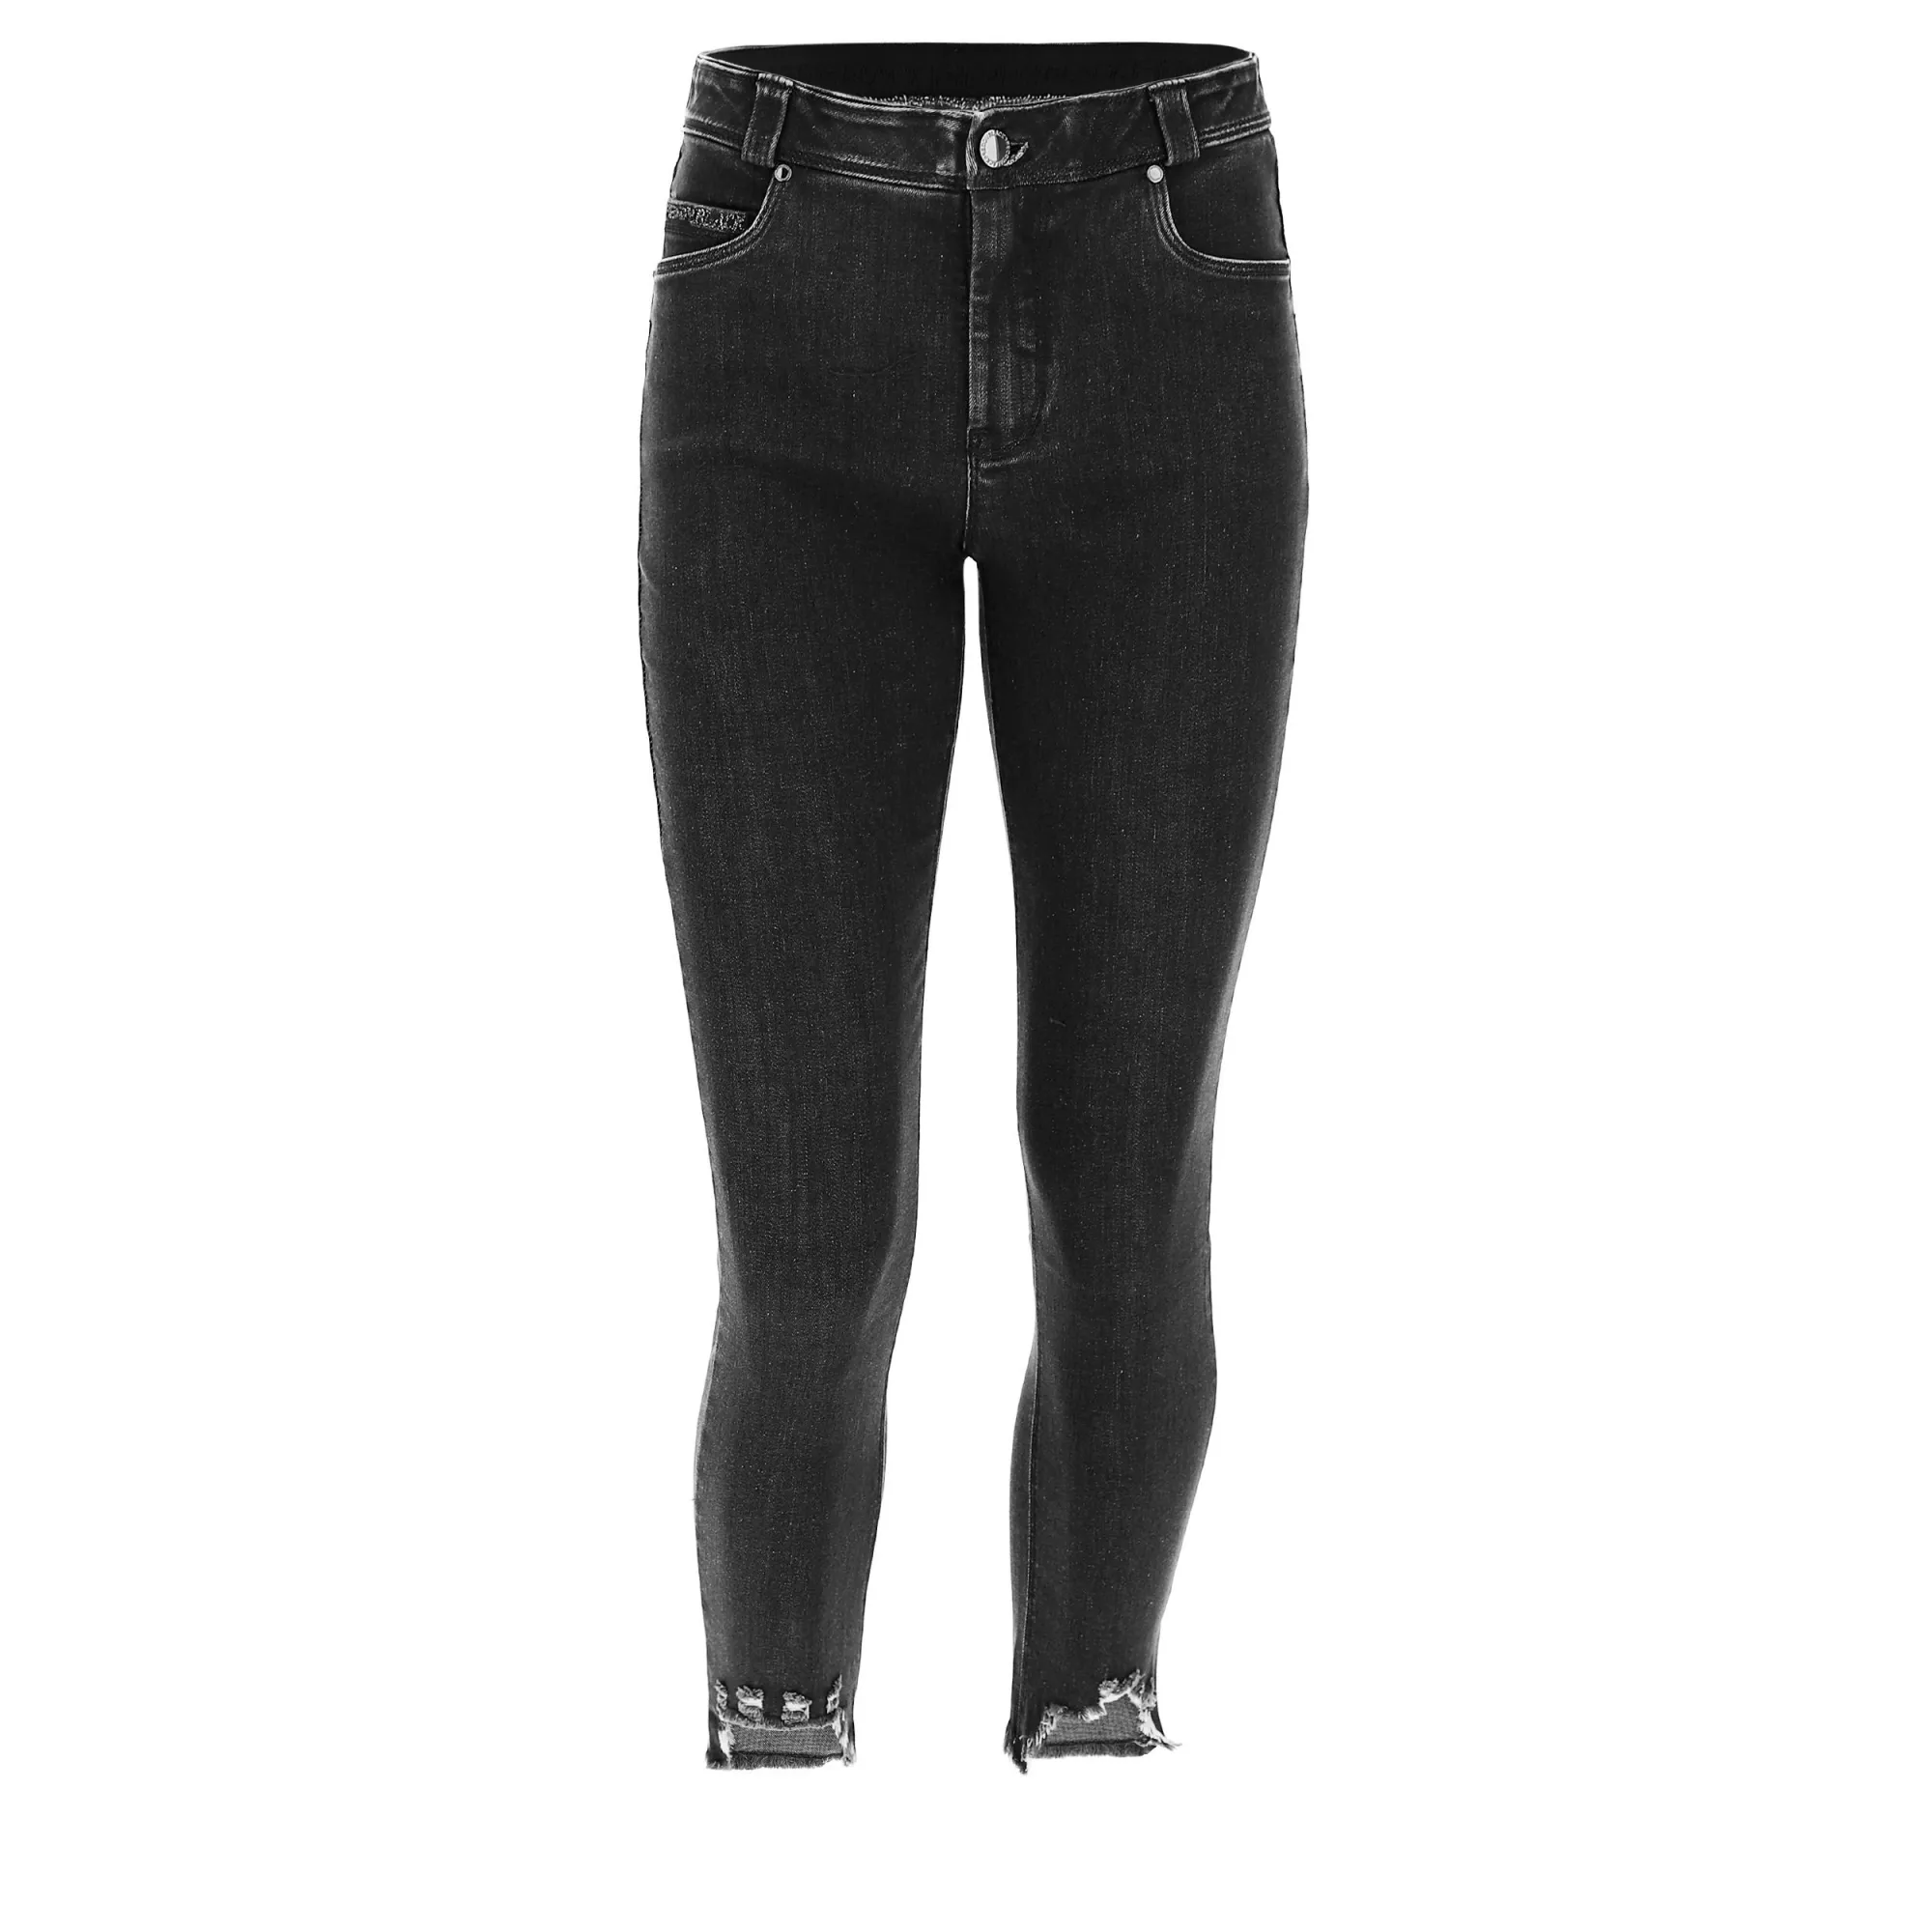 Freddy Fit Jeans - 7/8 Regular Waist Skinny - Destroyed - Black Denim – Black Seam - J7N